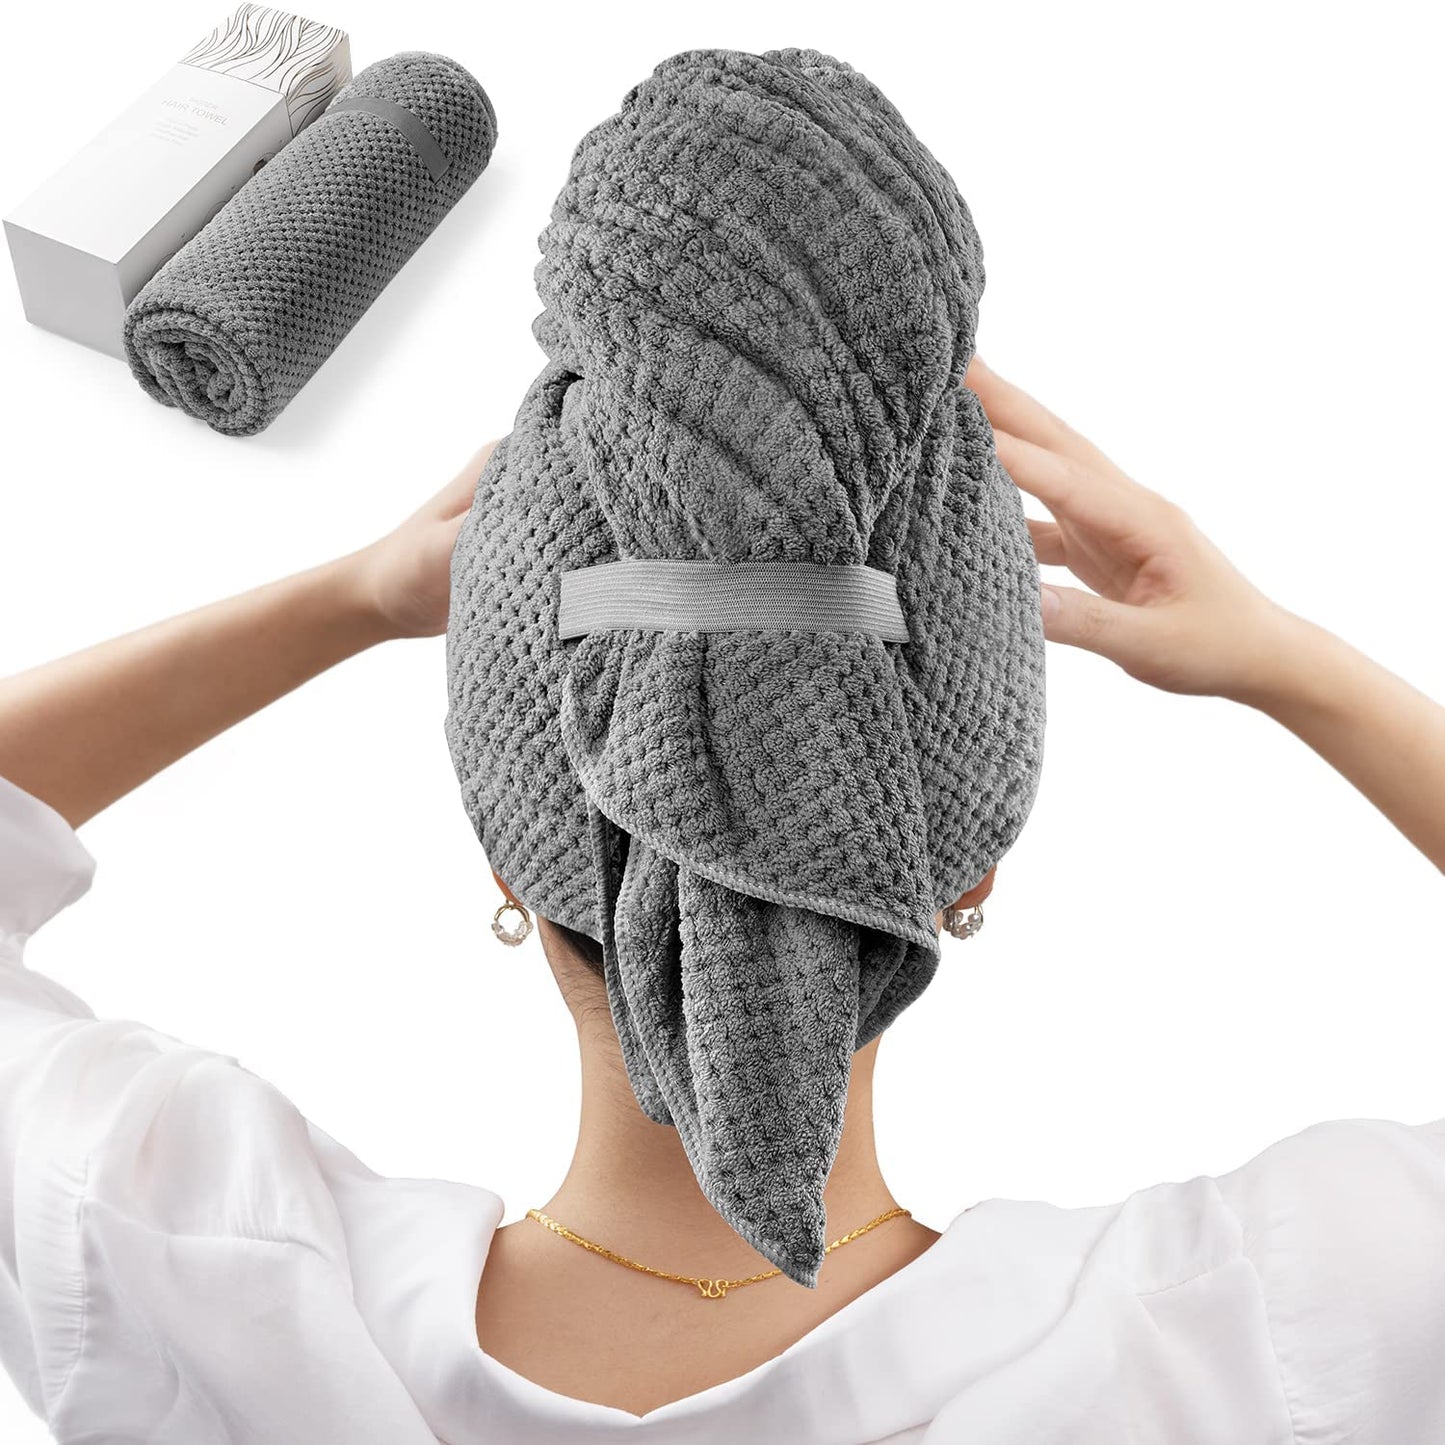 Hair Towel Large Microfiber Wrap For Women